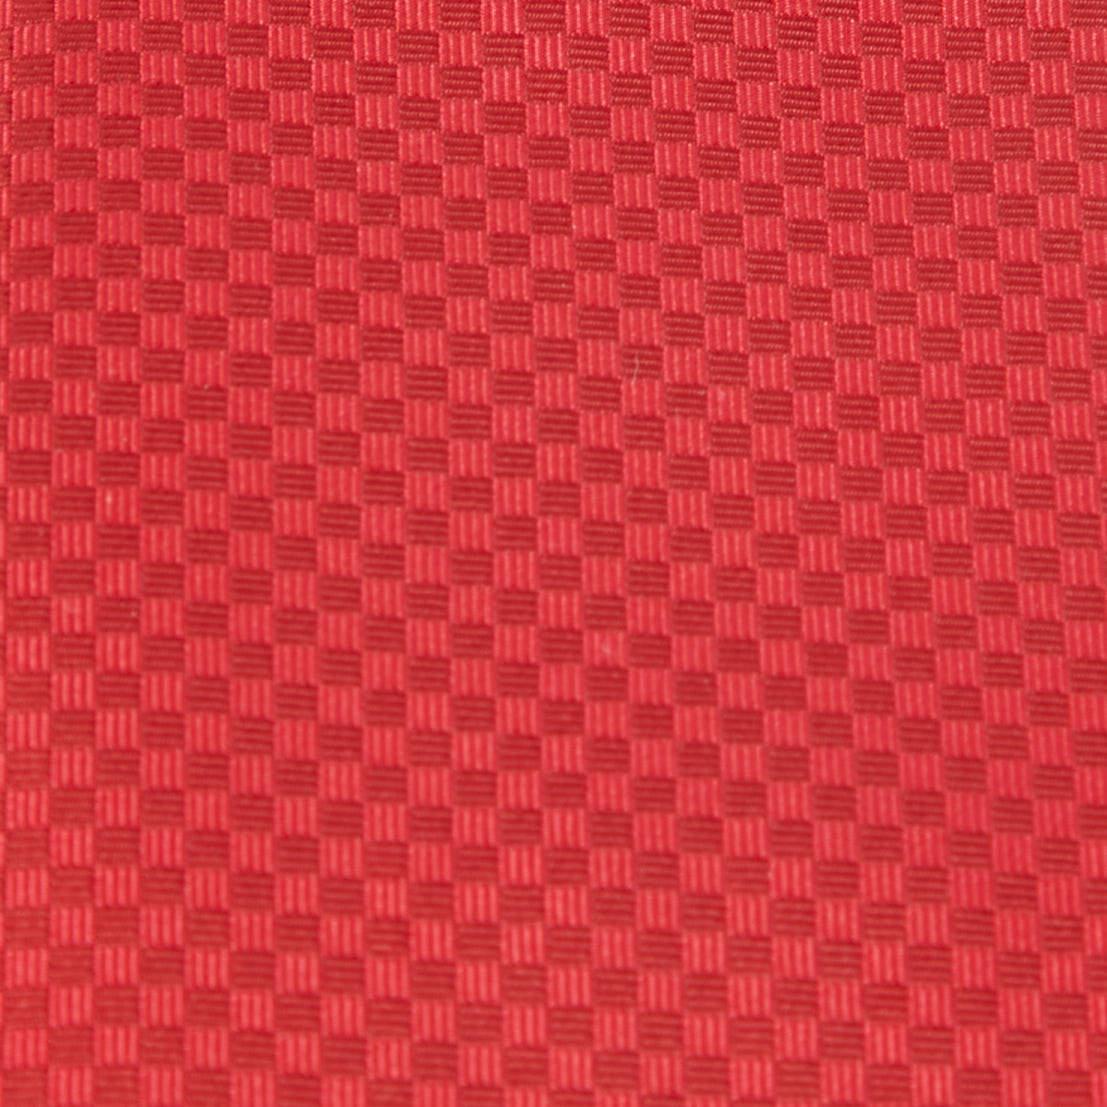  Louis Vuitton Red Micro Damier Silk Tie 1